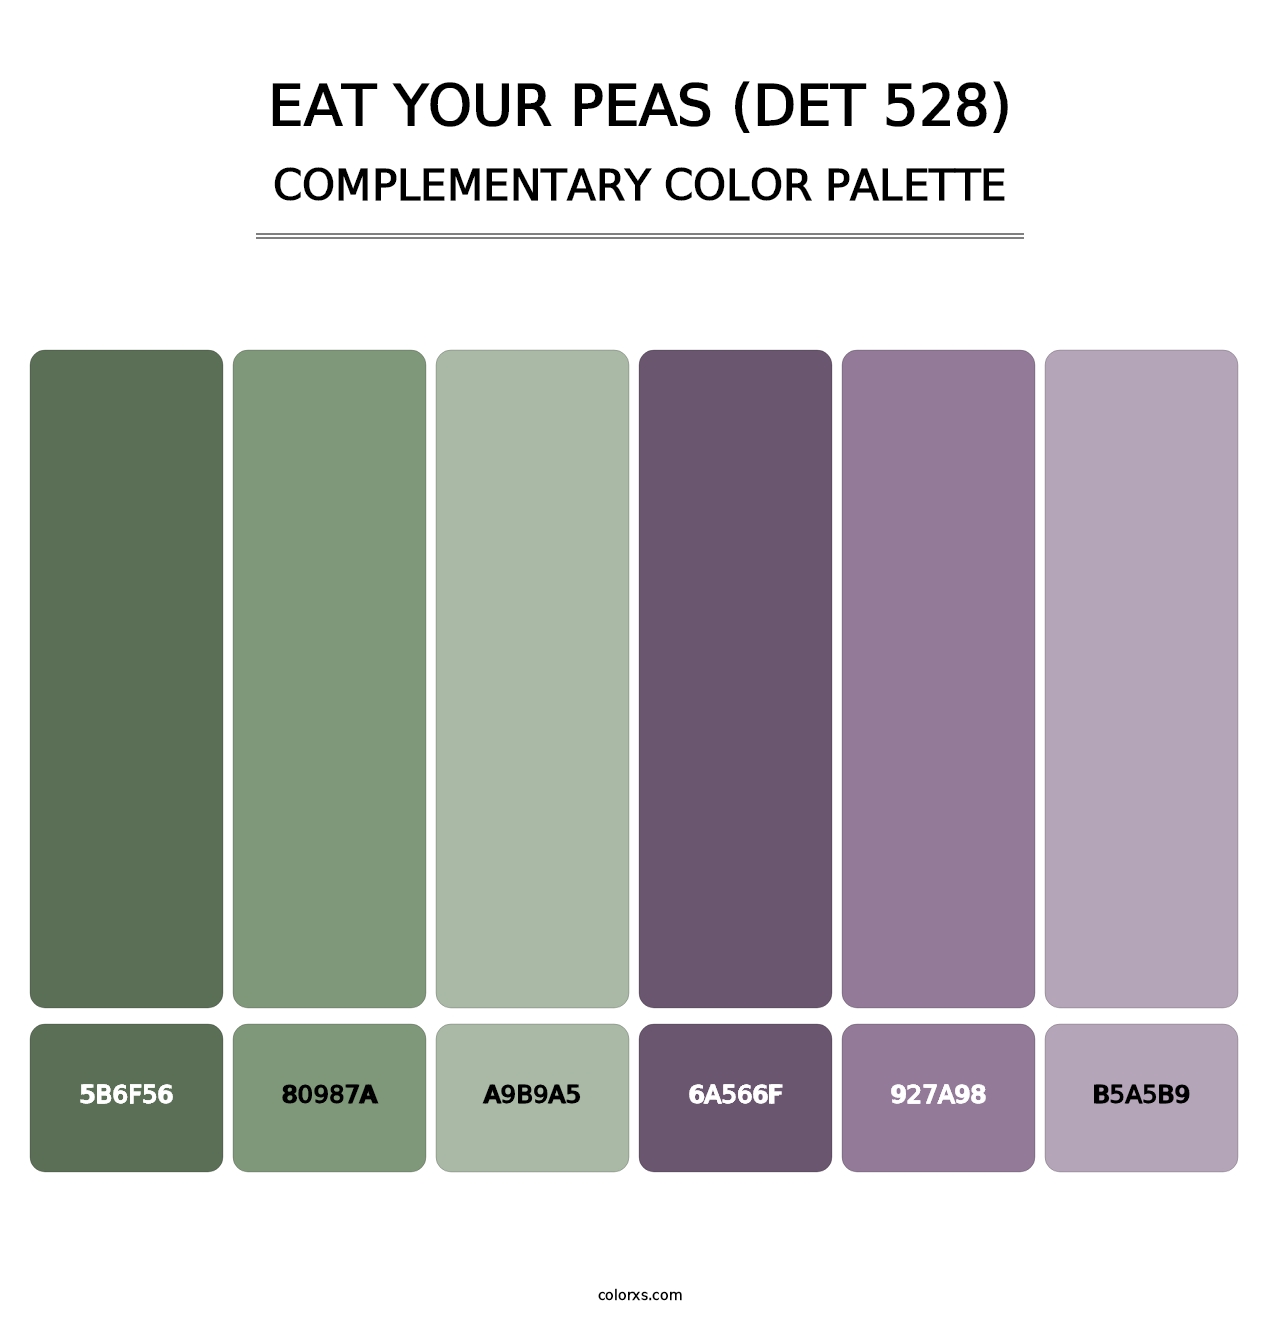 Eat Your Peas (DET 528) - Complementary Color Palette